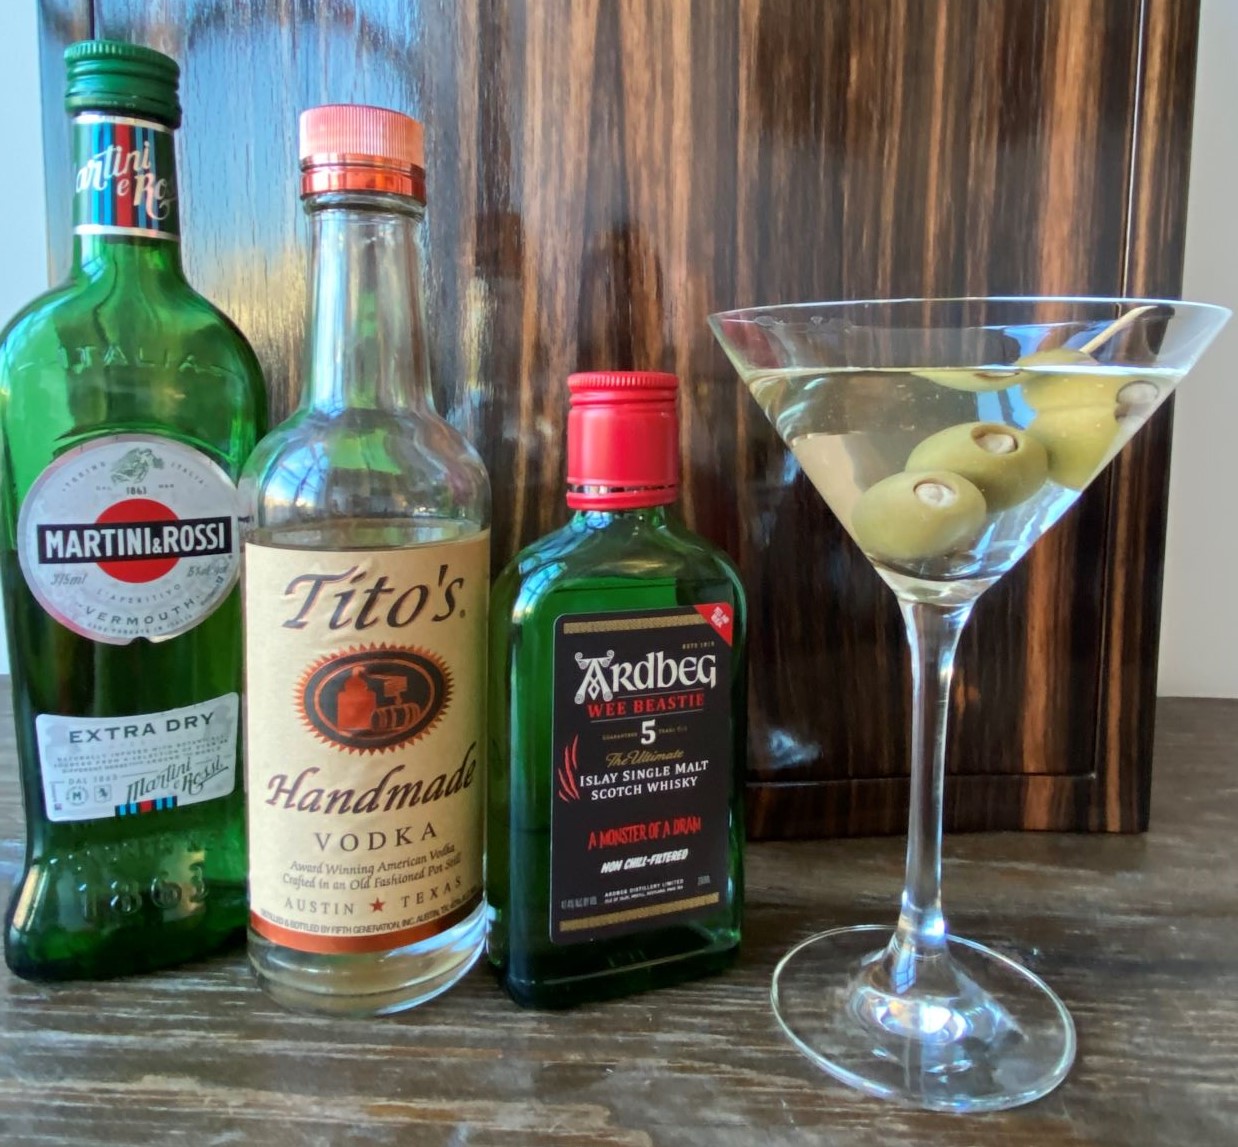 “Ardbeg Olive” Vodka Martini